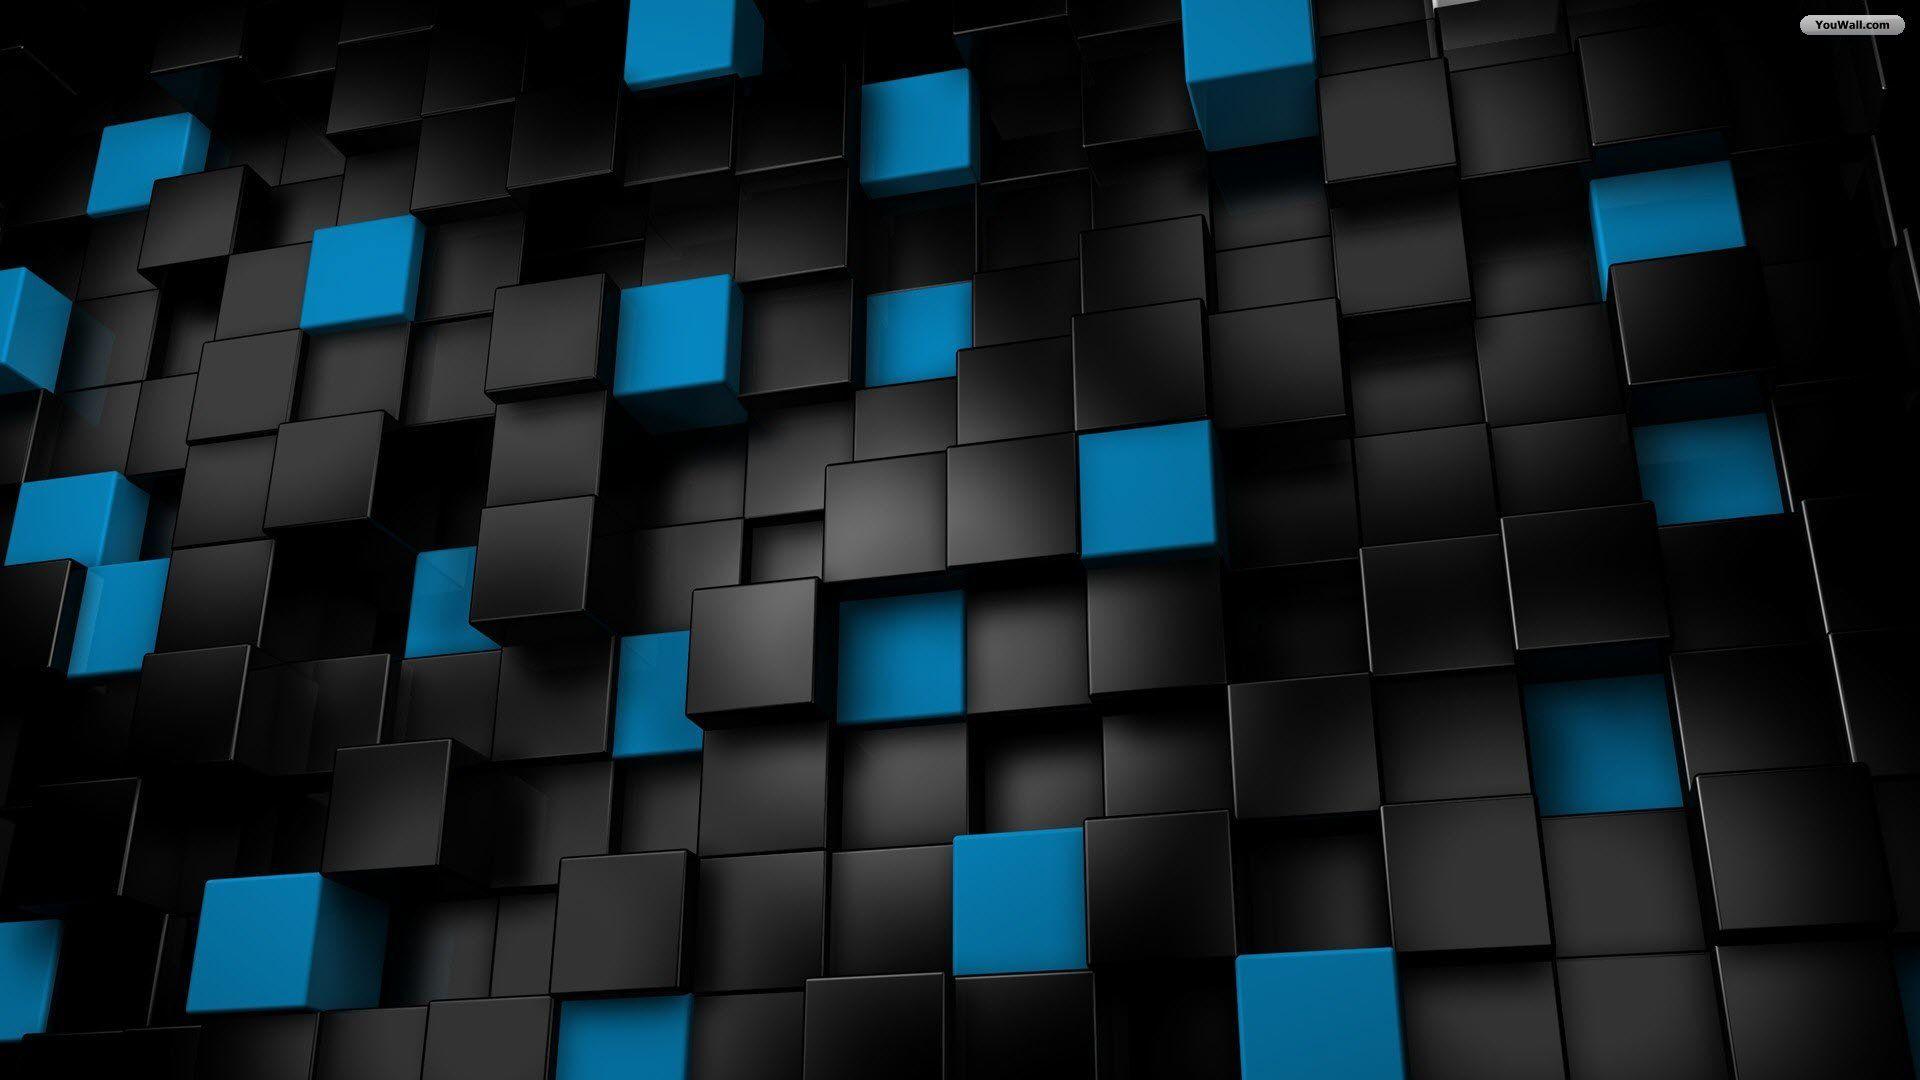 Wallpaper For > Black And Blue Wallpaper Desktop